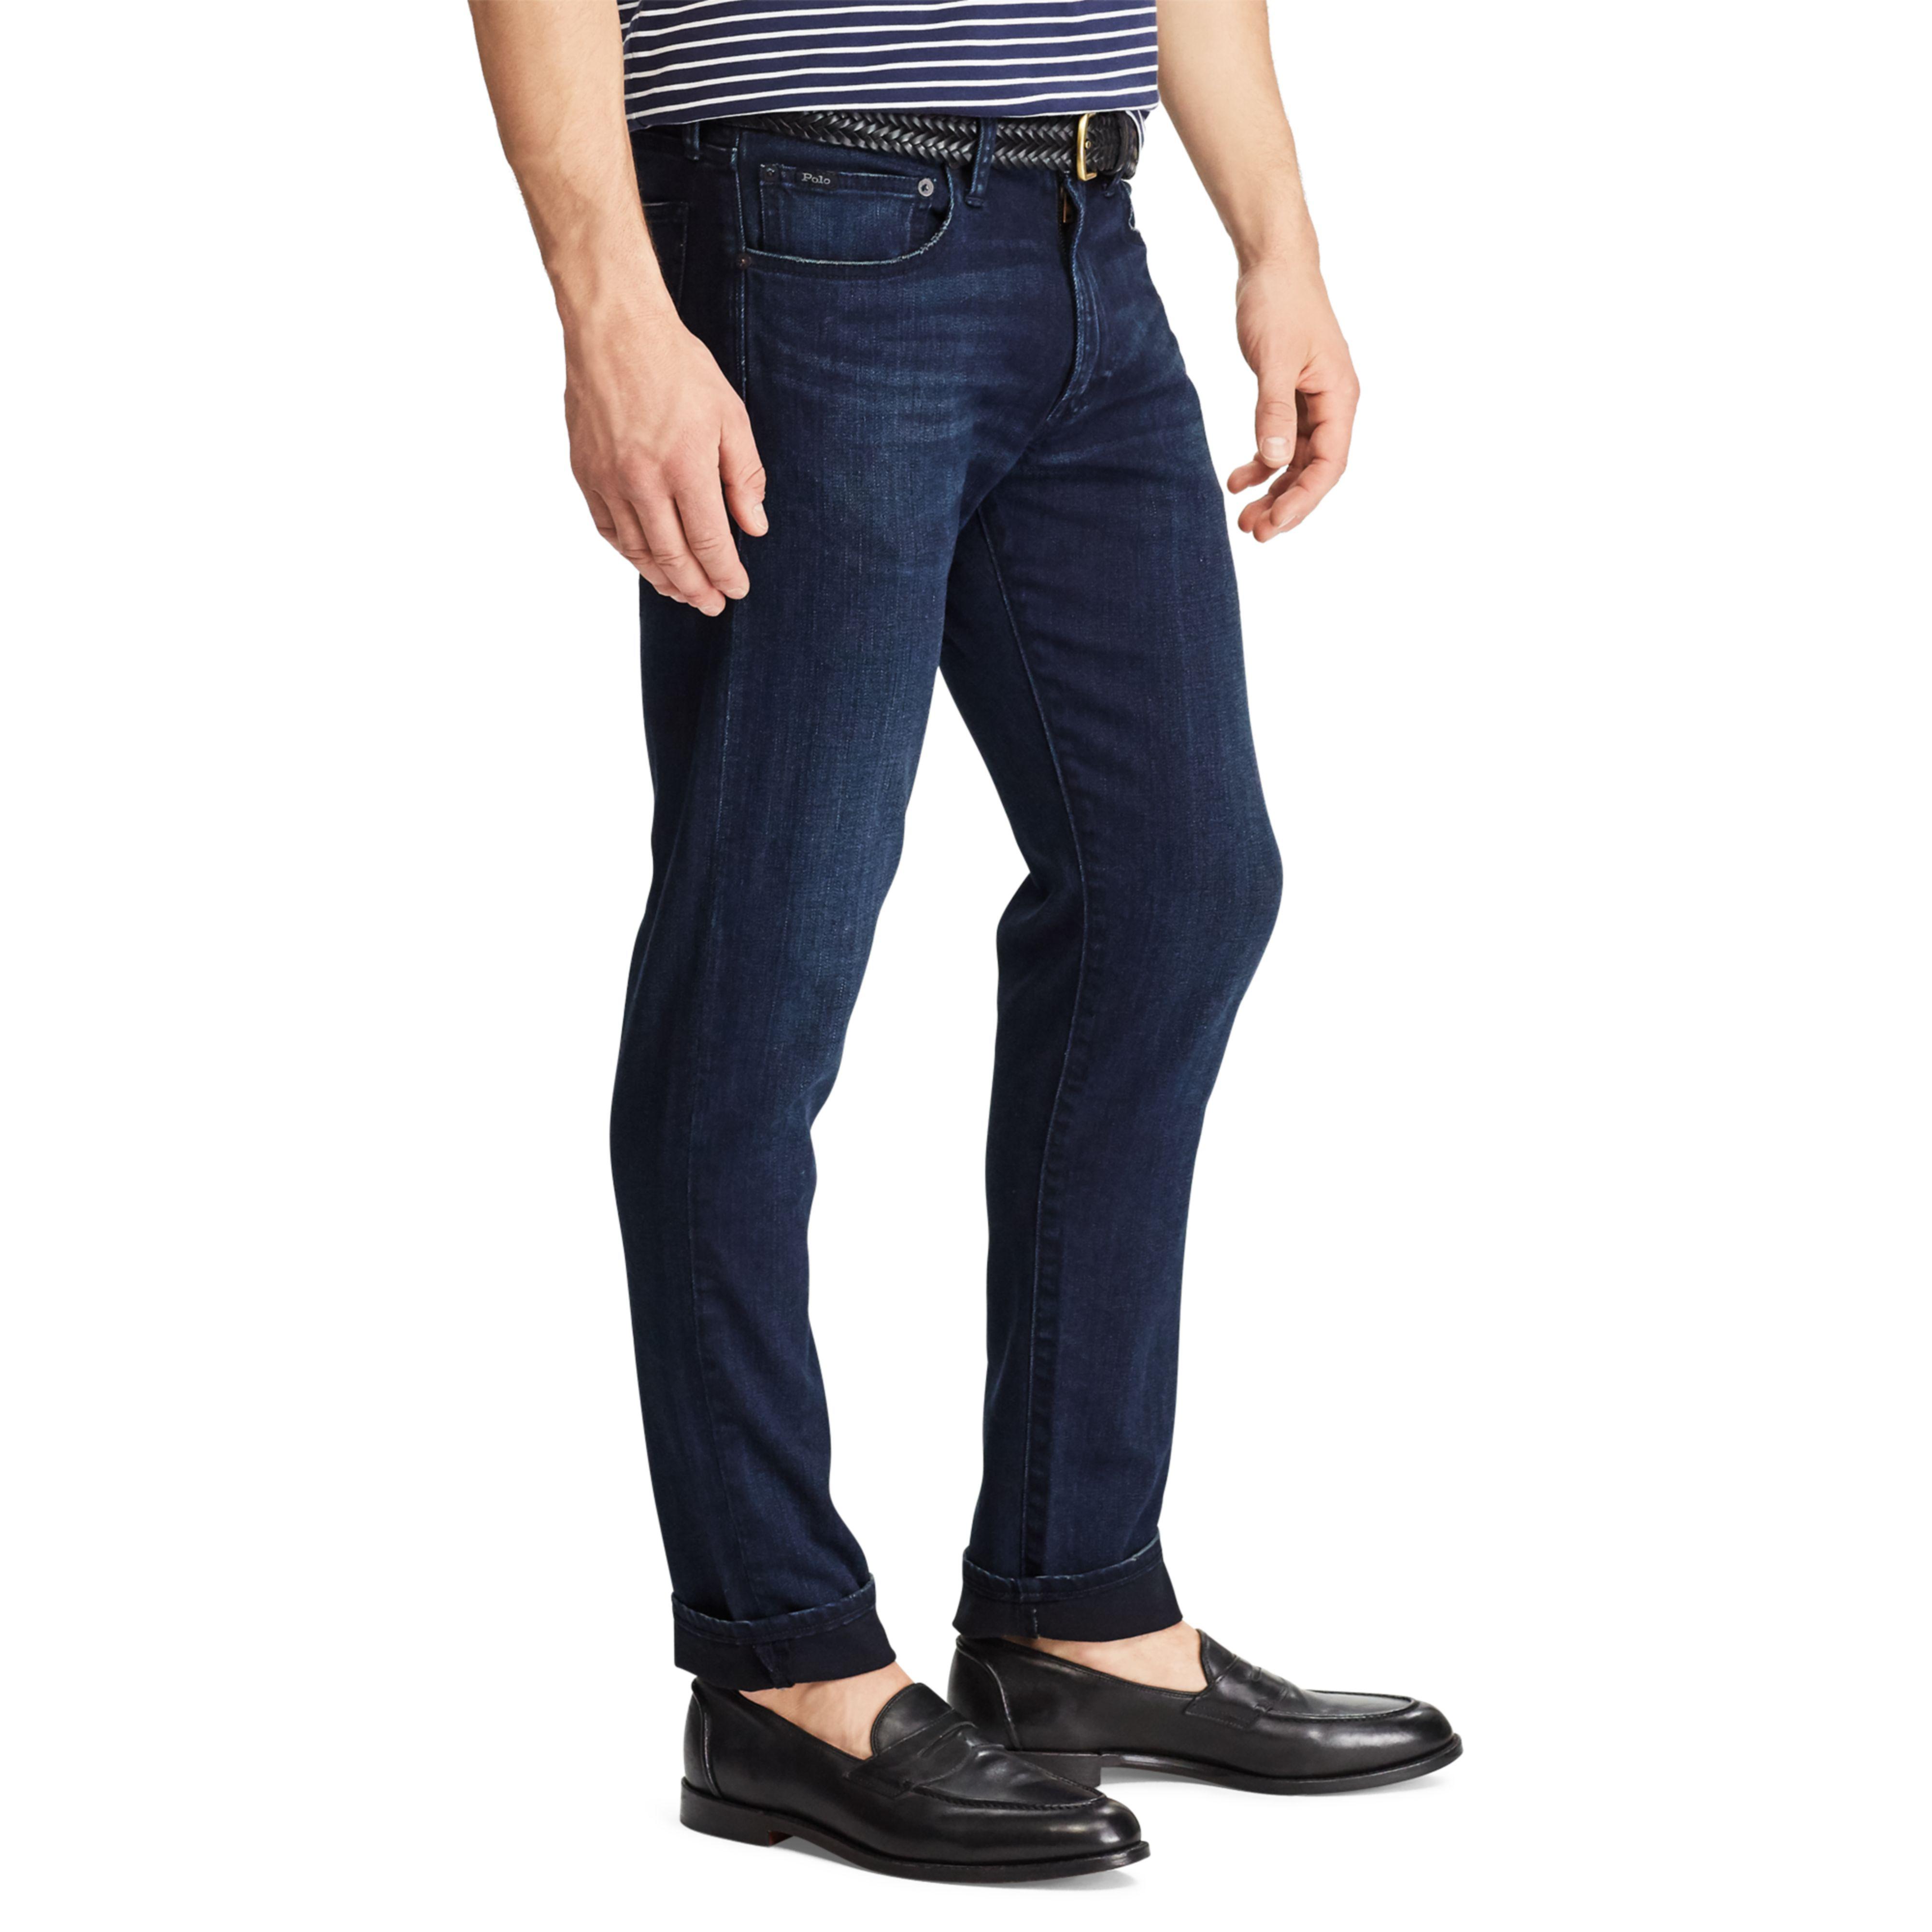 Polo Eldridge Skinny Jeans Deals, SAVE 59% 